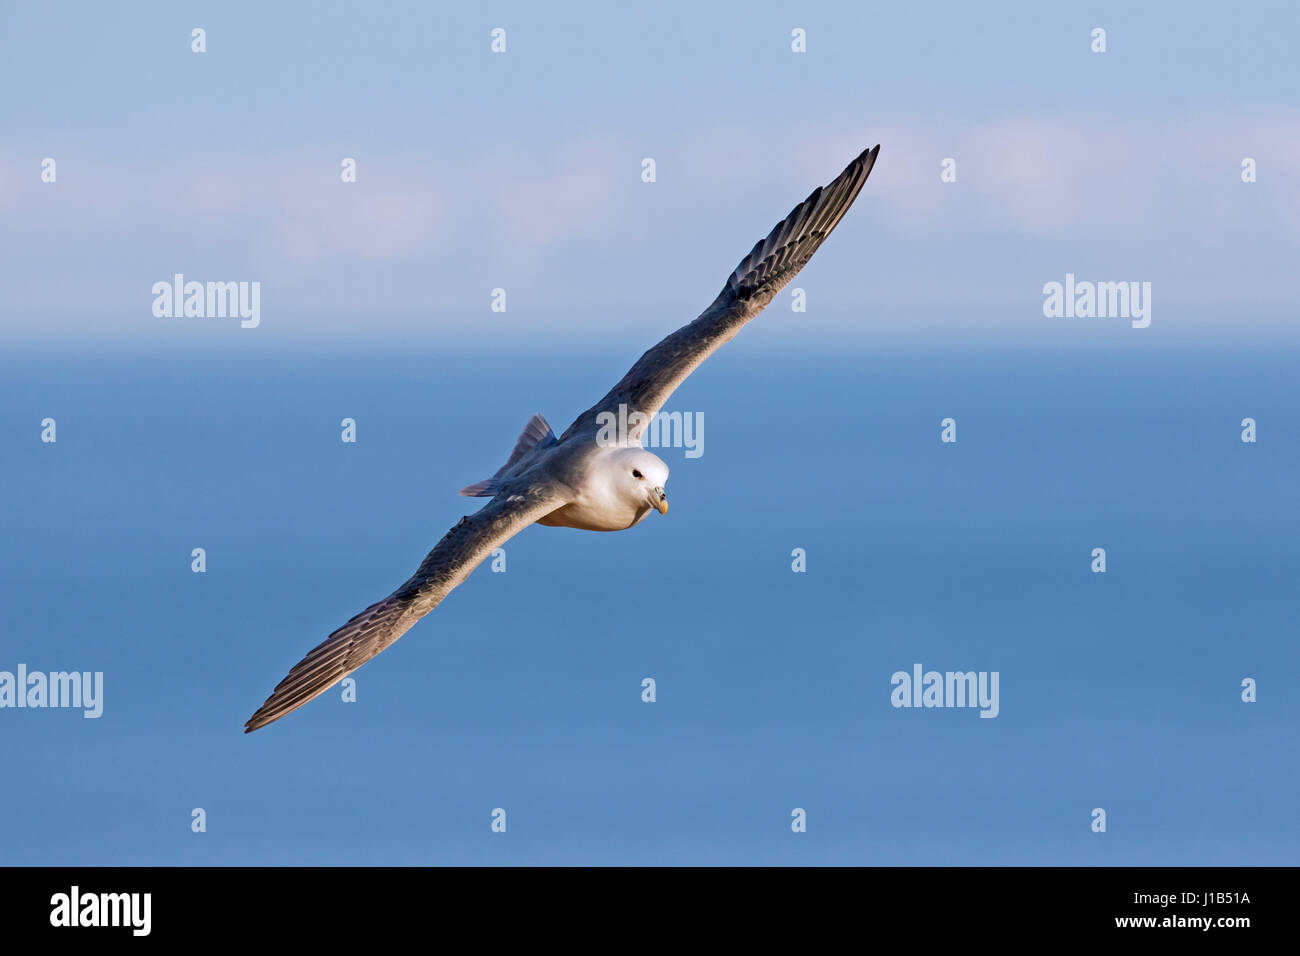 Northern fulmar / Arctic fulmar (Fulmarus glacialis) soaring over the sea Stock Photo